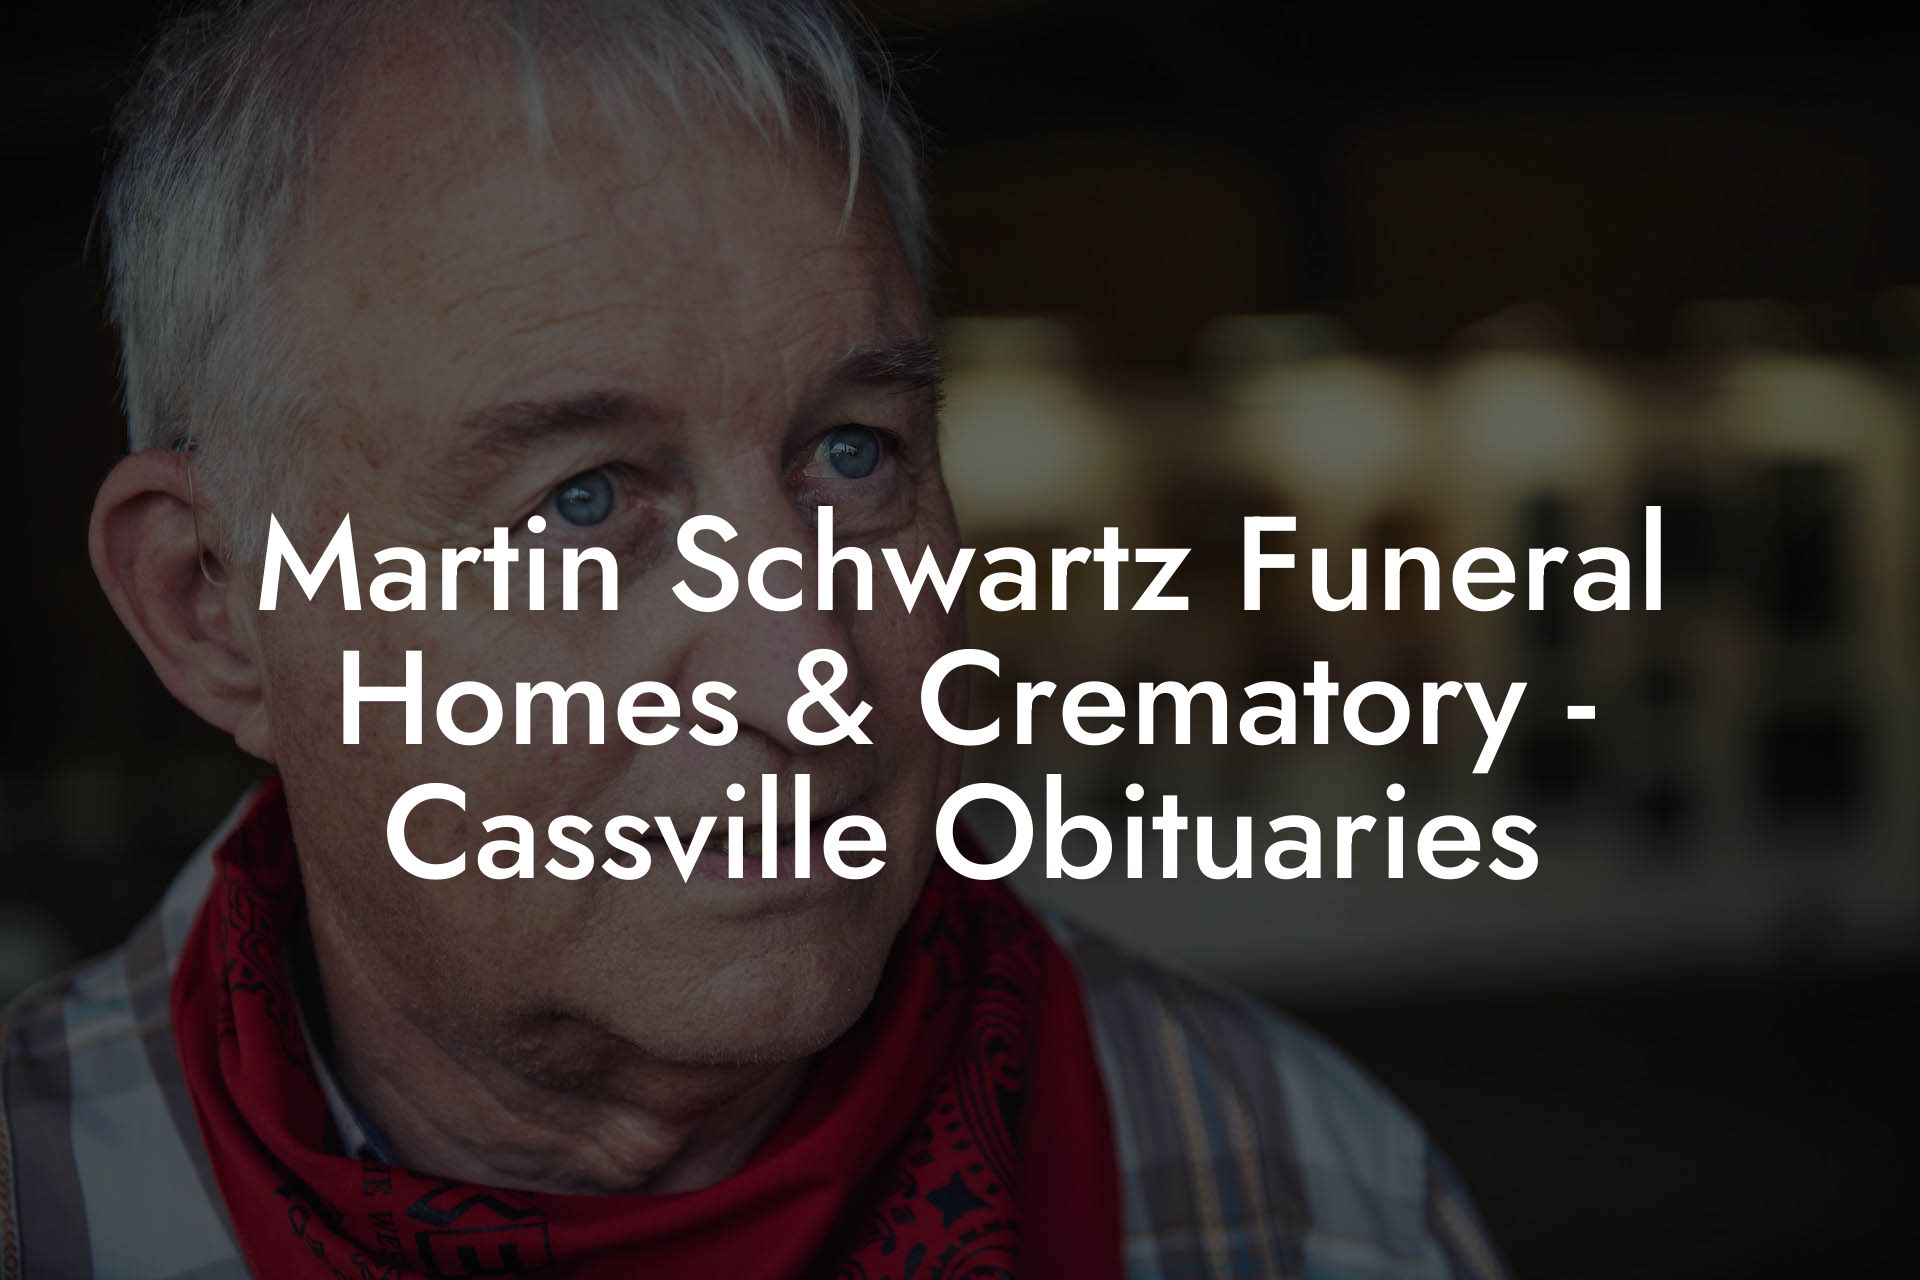 Martin Schwartz Funeral Homes & Crematory - Cassville Obituaries